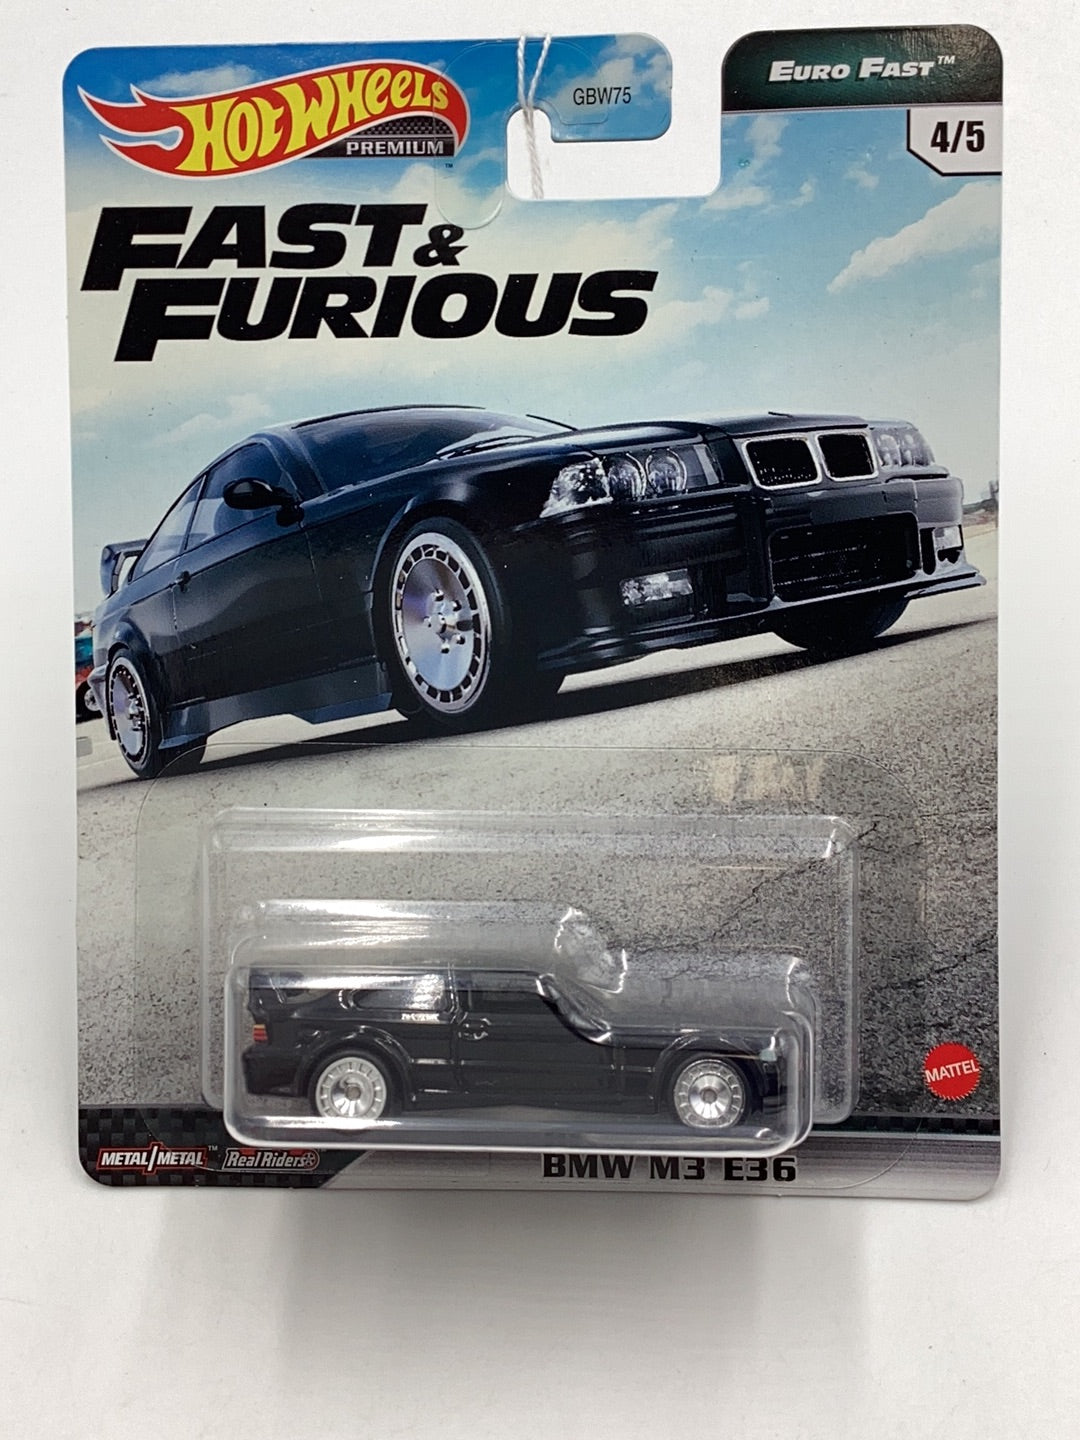 Hot Wheels fast and furious Euro Fast #4 BMW M3 E36 247C